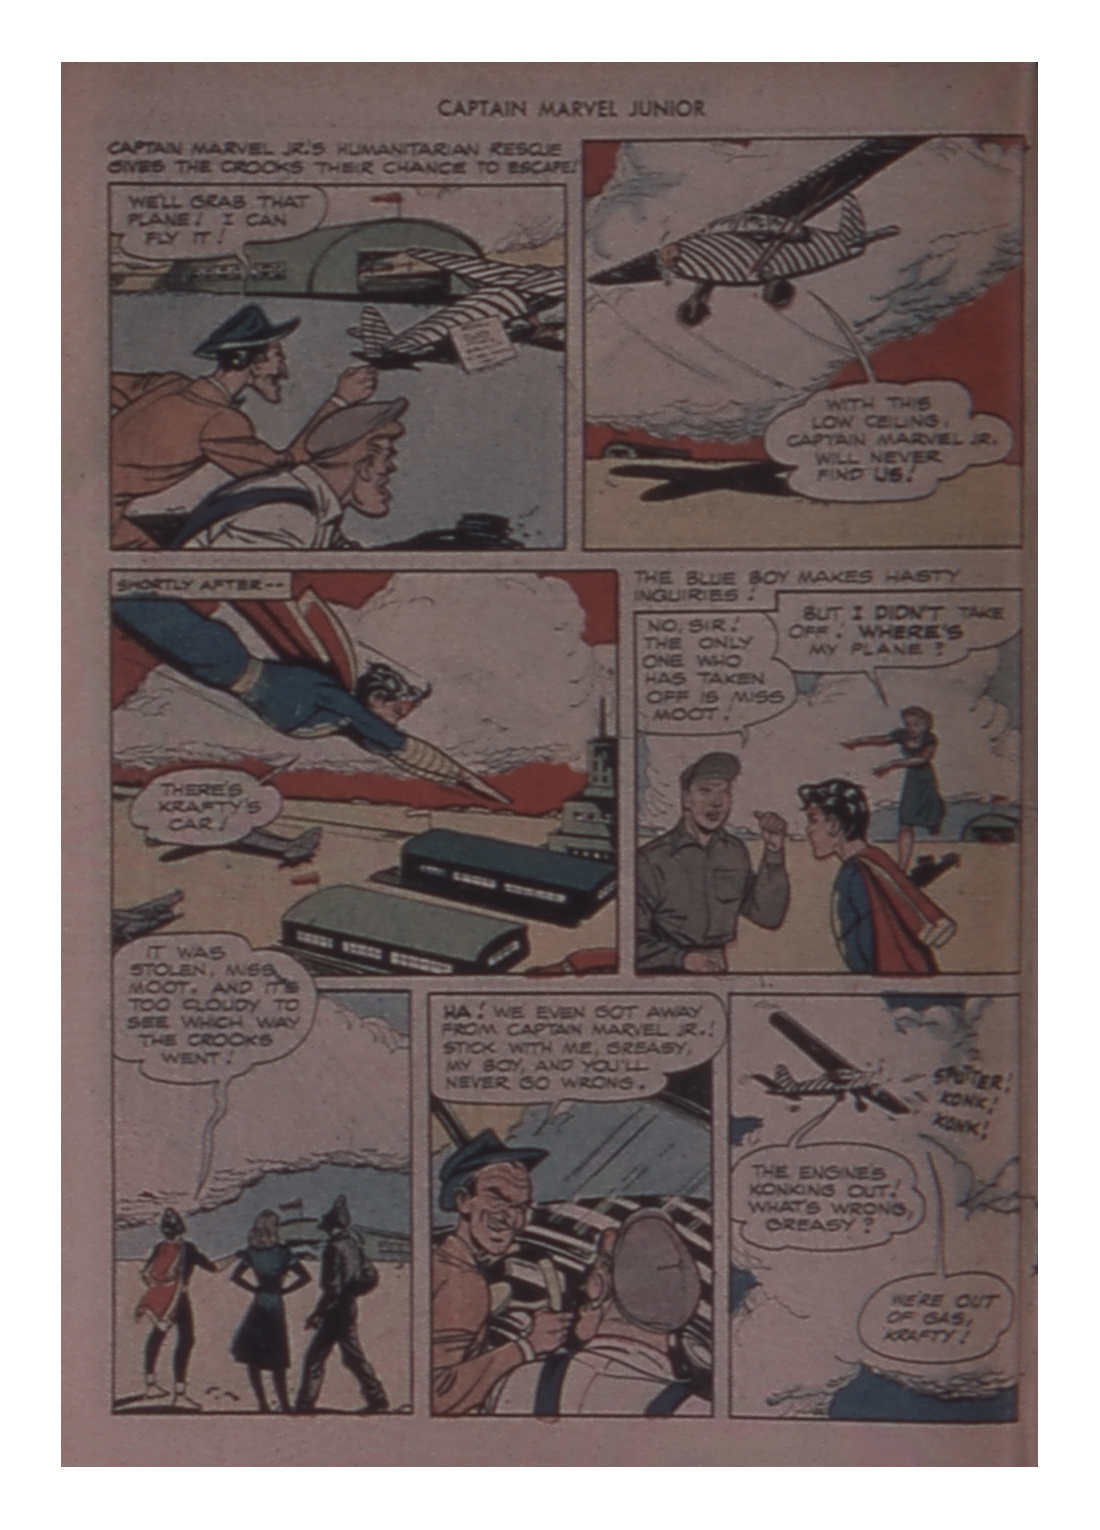 Read online Captain Marvel, Jr. comic -  Issue #65 - 48